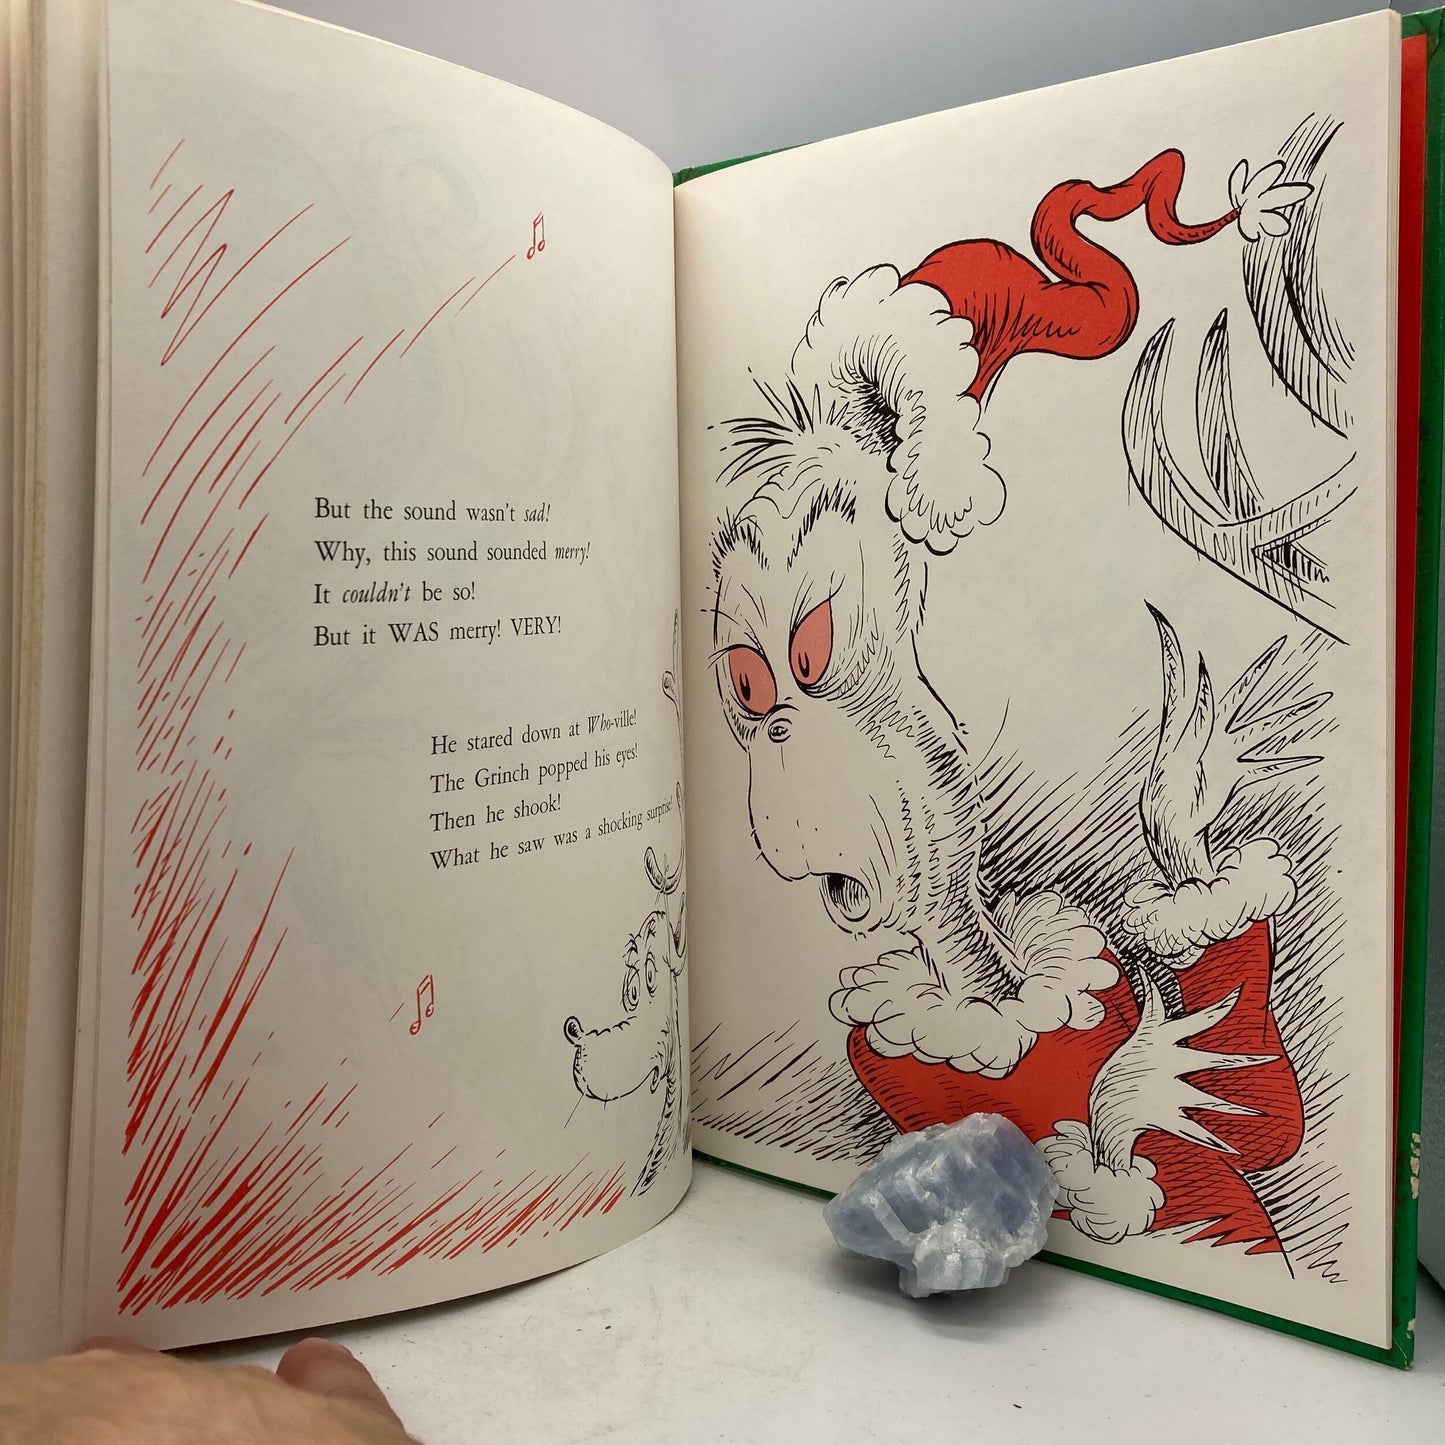 SEUSS, Dr. "How the Grinch Stole Christmas" [Random House, c1967] - Buzz Bookstore